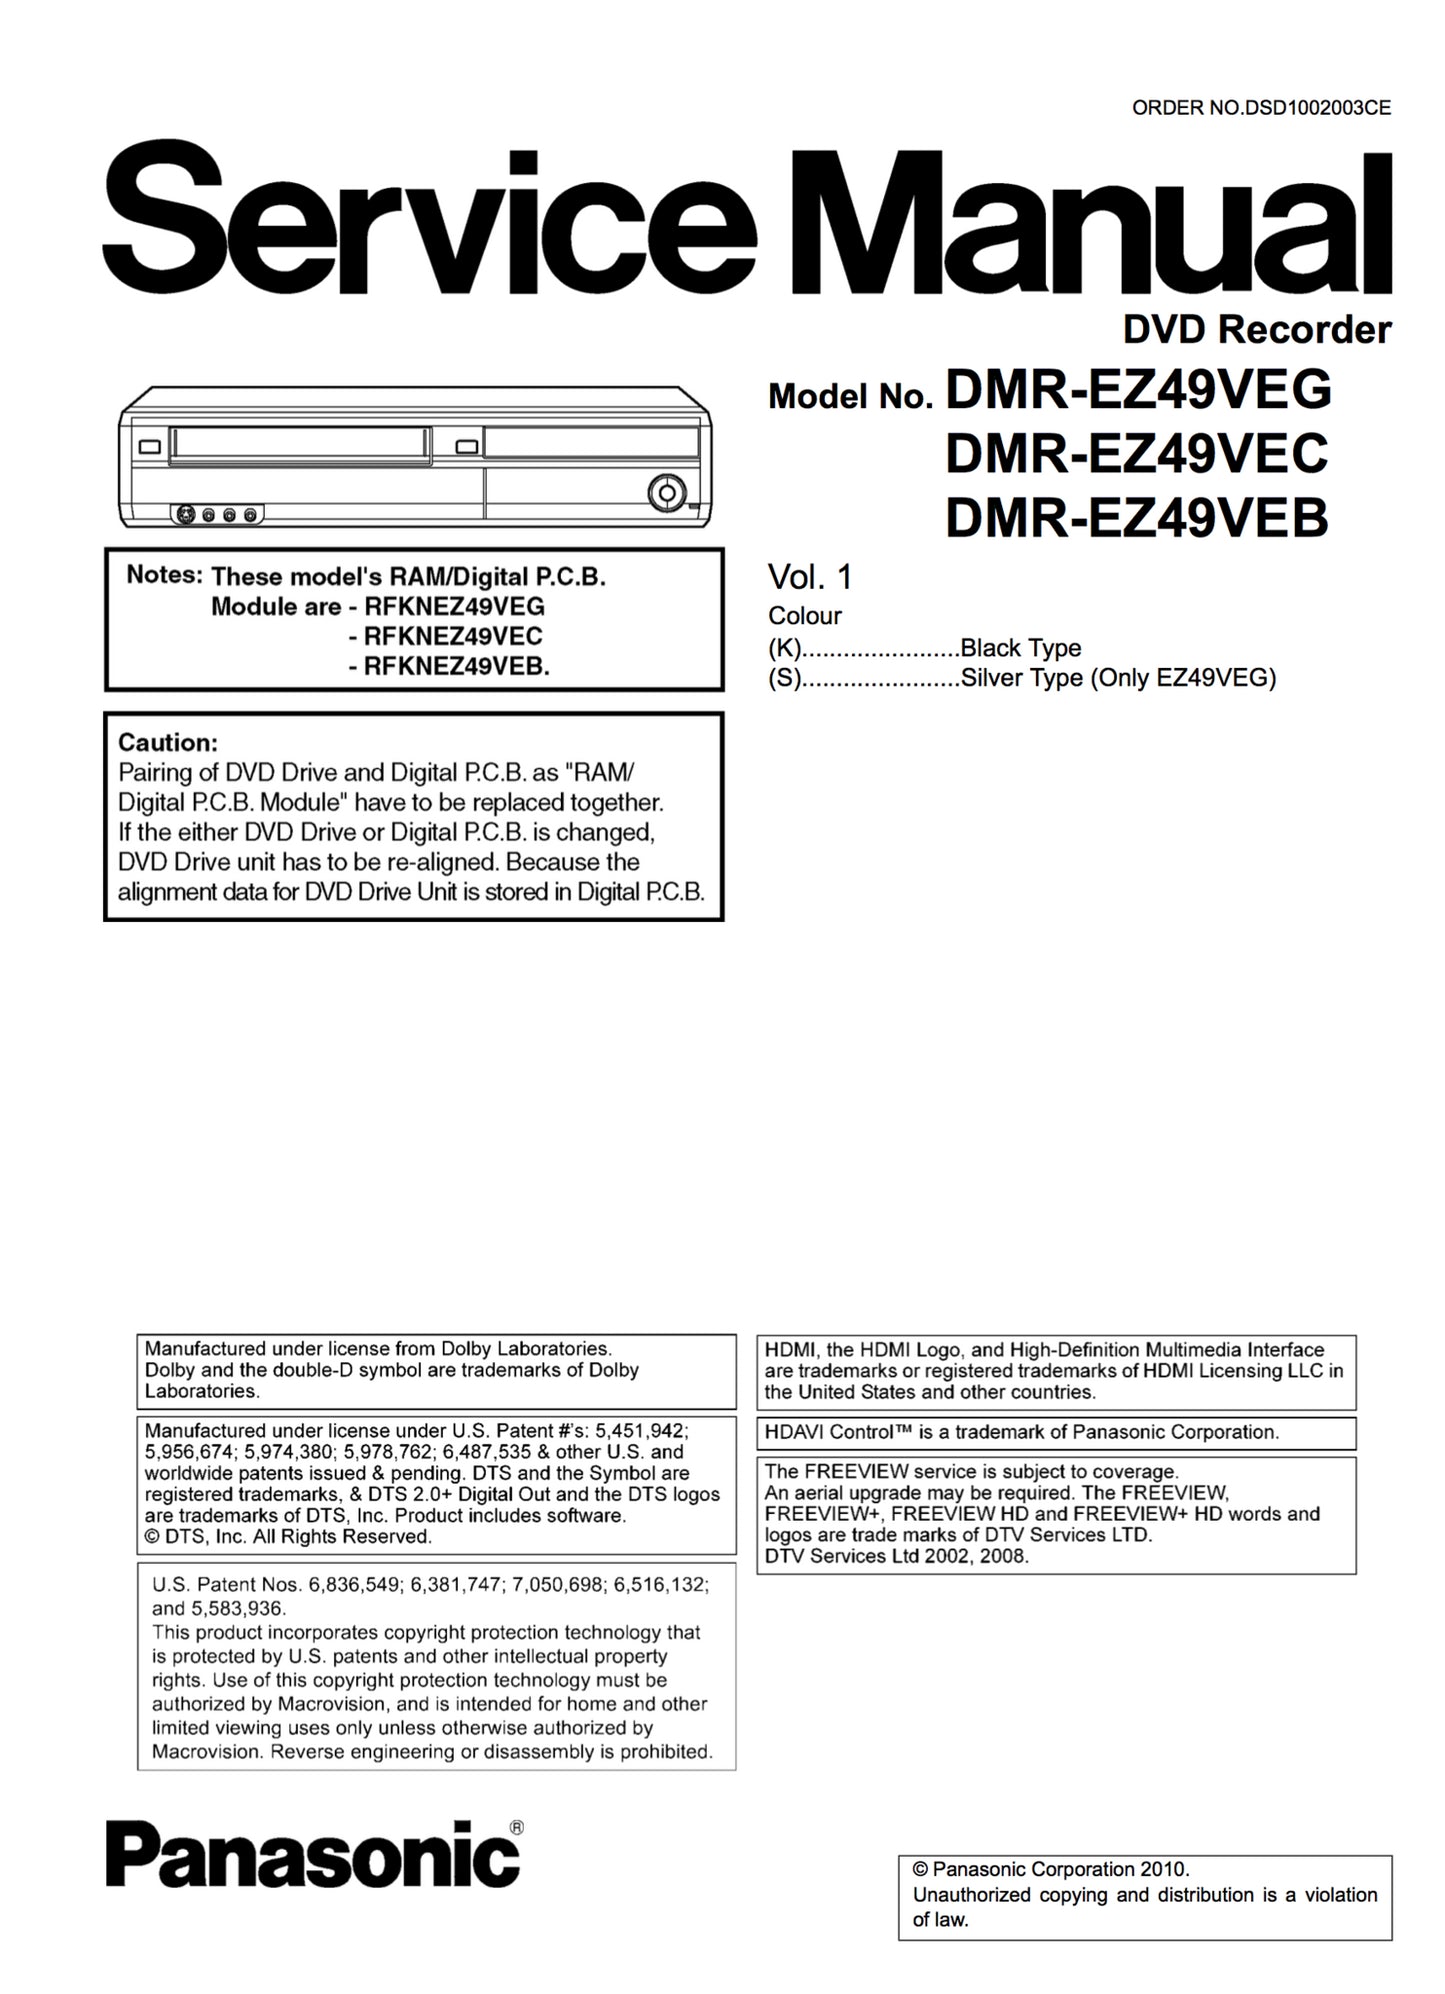 Panasonic DMR-EZ49VEB/VEC/VEG Service Manual Complete